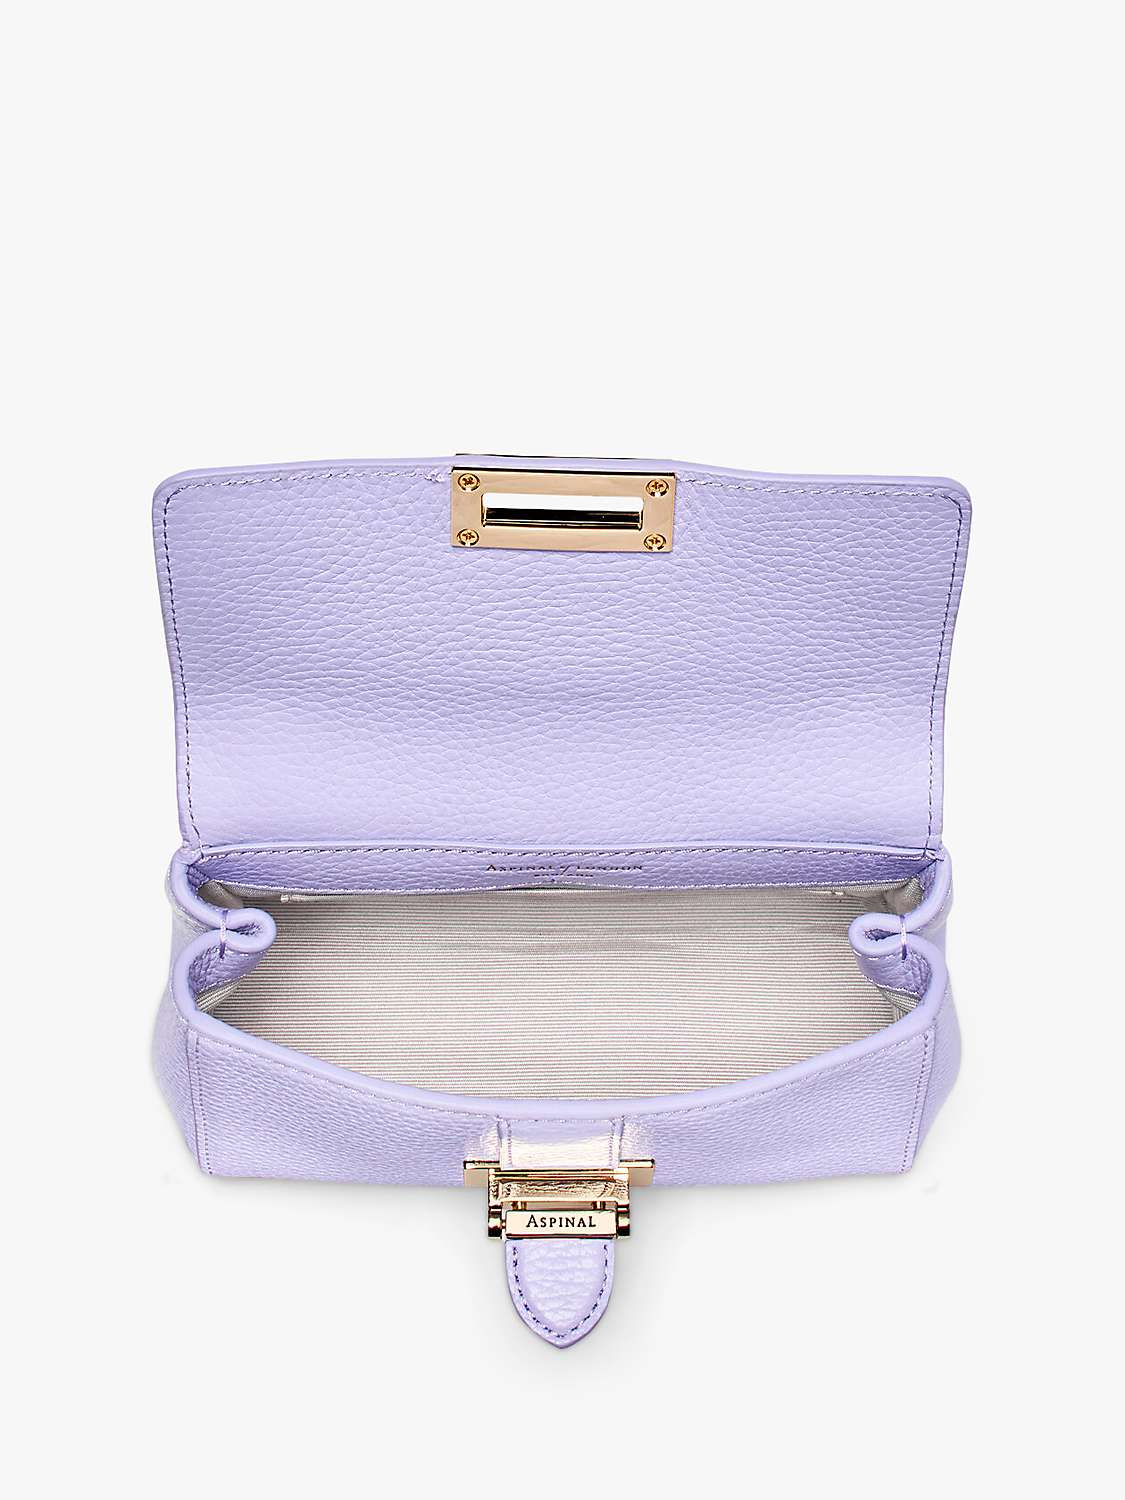 Buy Aspinal of London Lottie Micro Pebble Leather Shoulder Bag Online at johnlewis.com